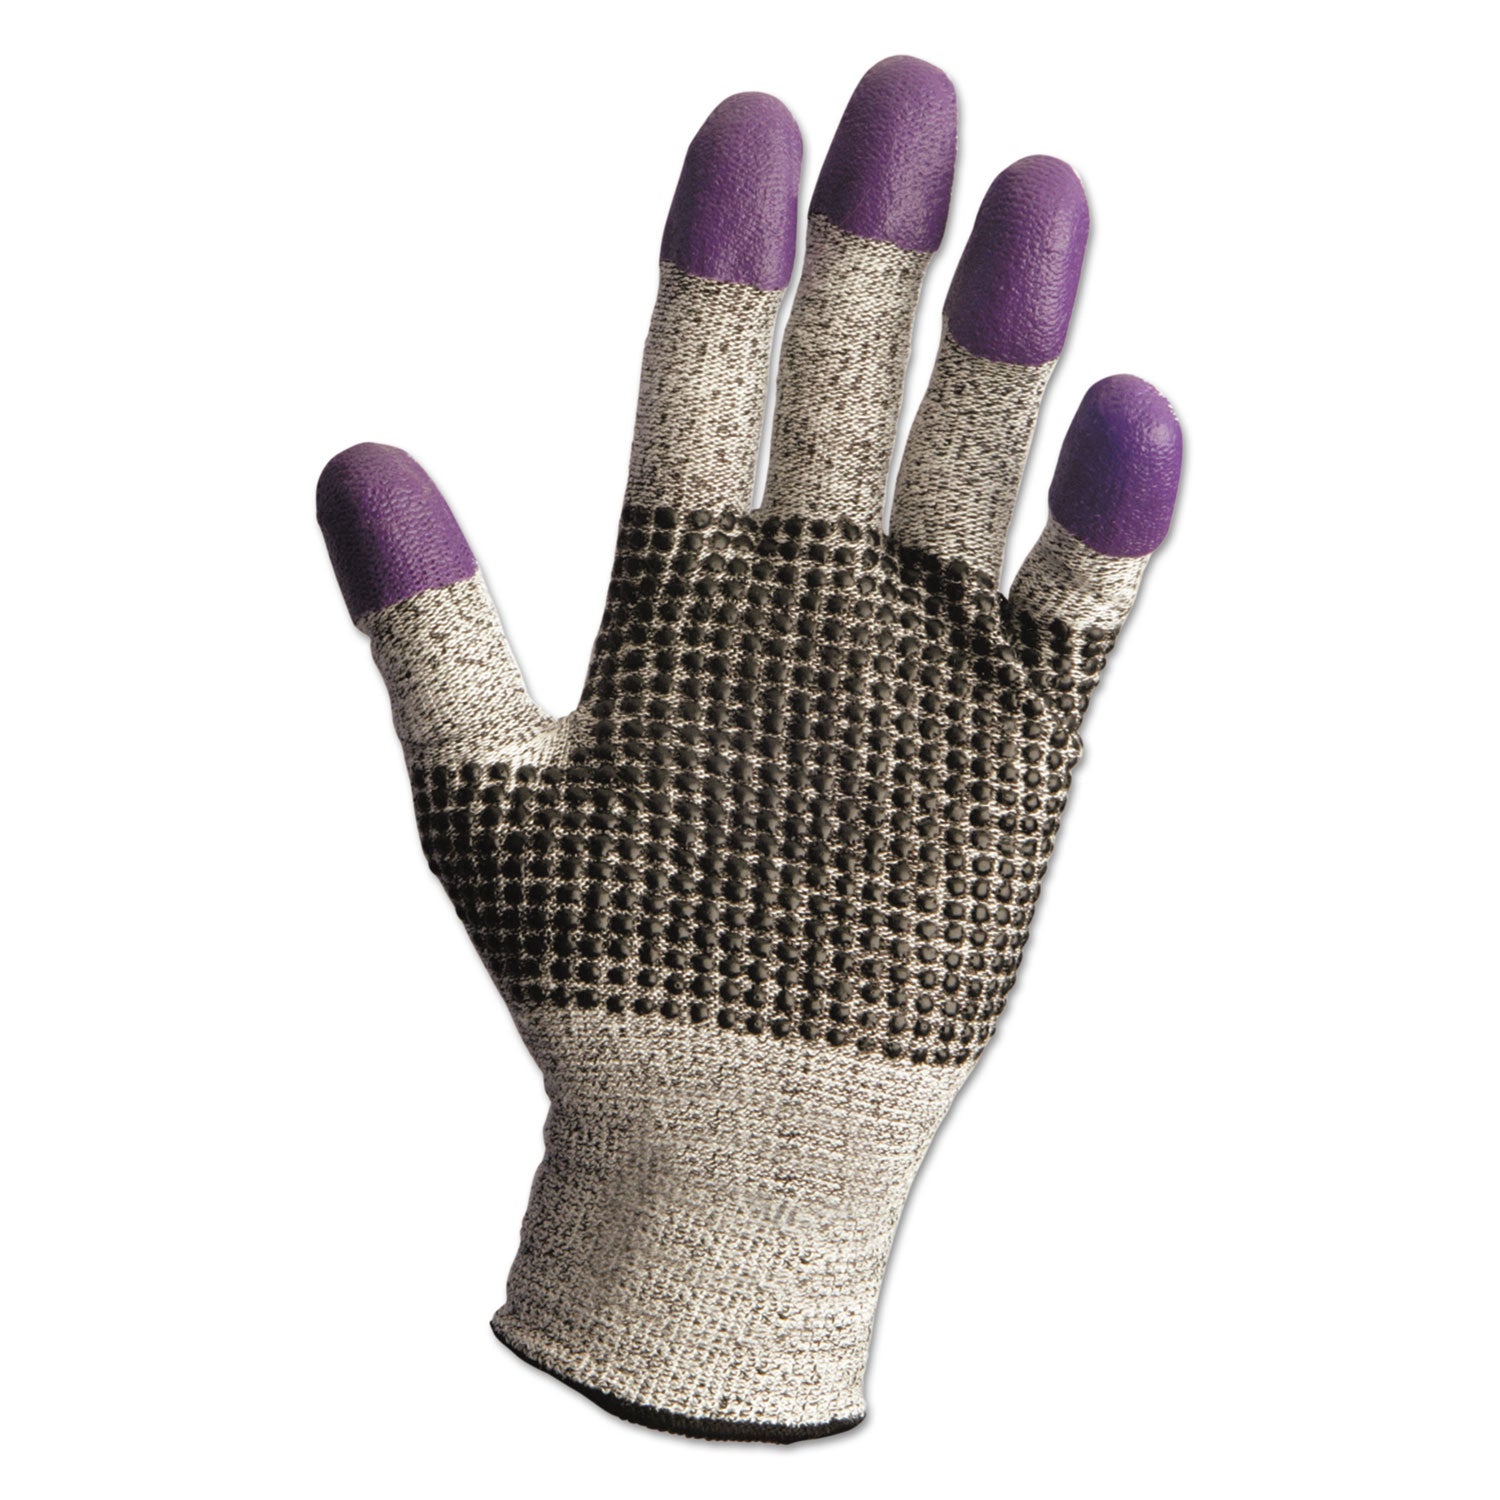 g60-purple-nitrile-gloves-230-mm-length-medium-size-8-black-white-pair_kcc97431 - 1